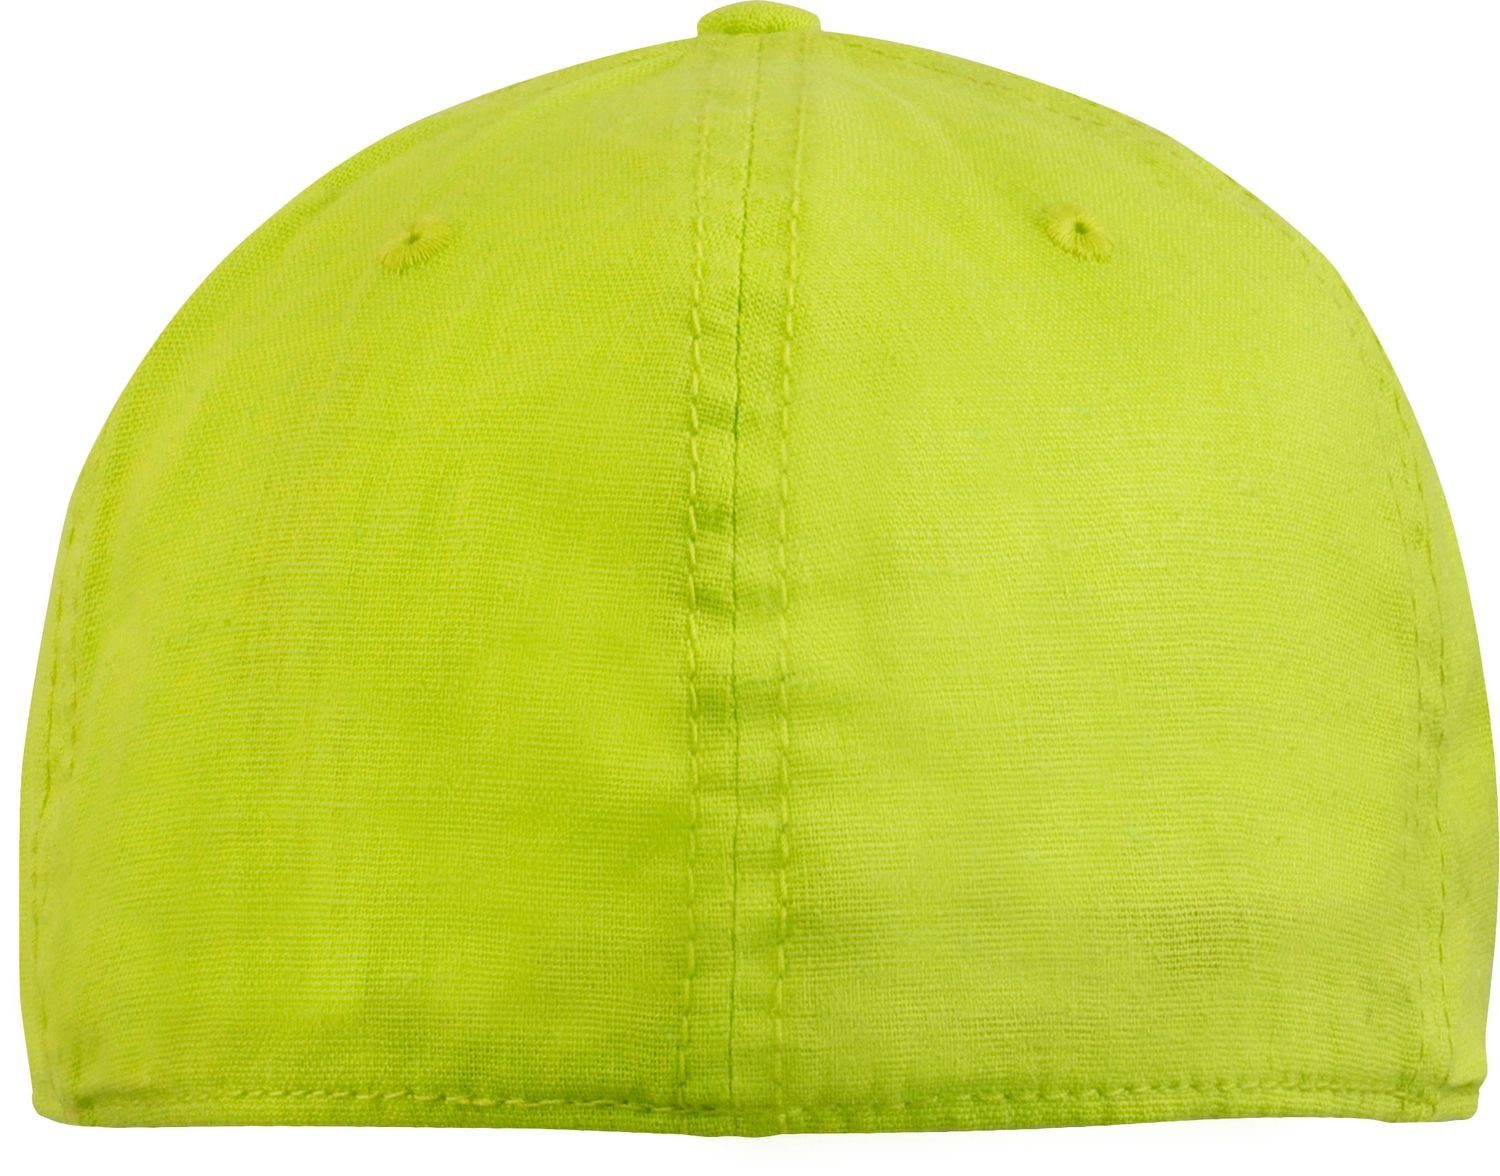 Leinen Kappe elastische Cap Baumwolle 54-lime chillouts Baseball & aus